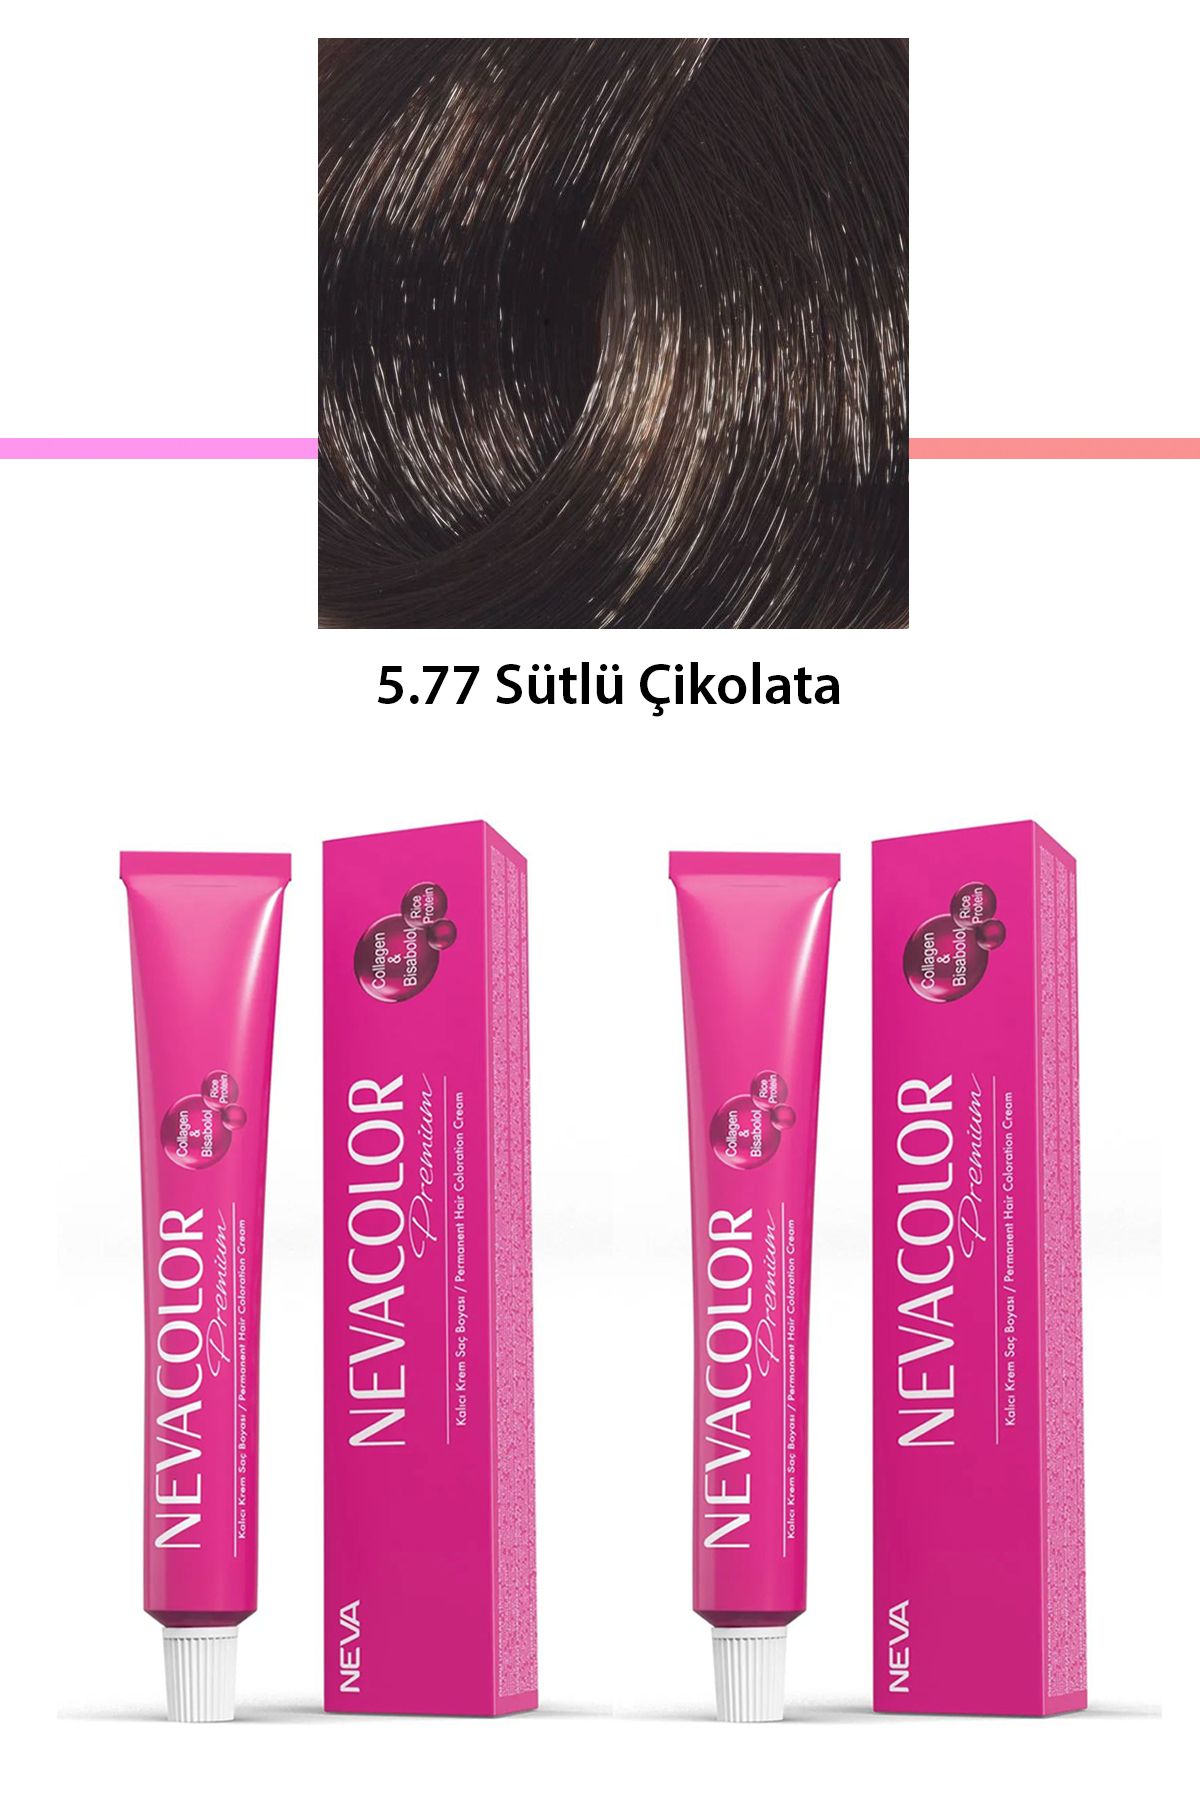 Neva Color 2 li Set Premium 5.77 Sütlü Çikolata - Kalıcı Krem Saç Boyası 2 X 50 g Tüp